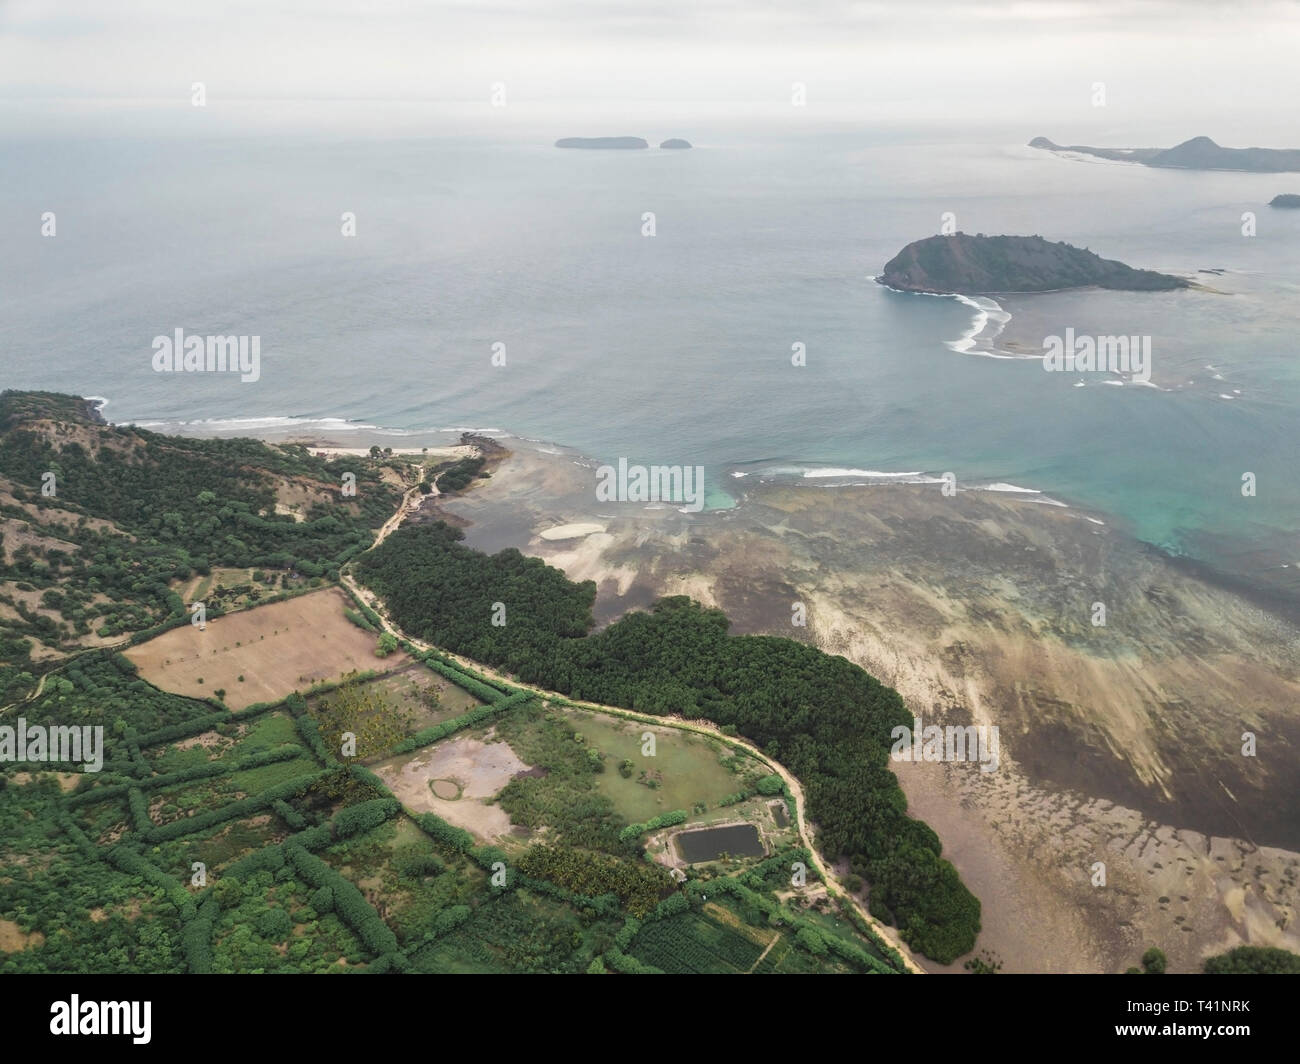 Aerial view of island coastline Stock Photo